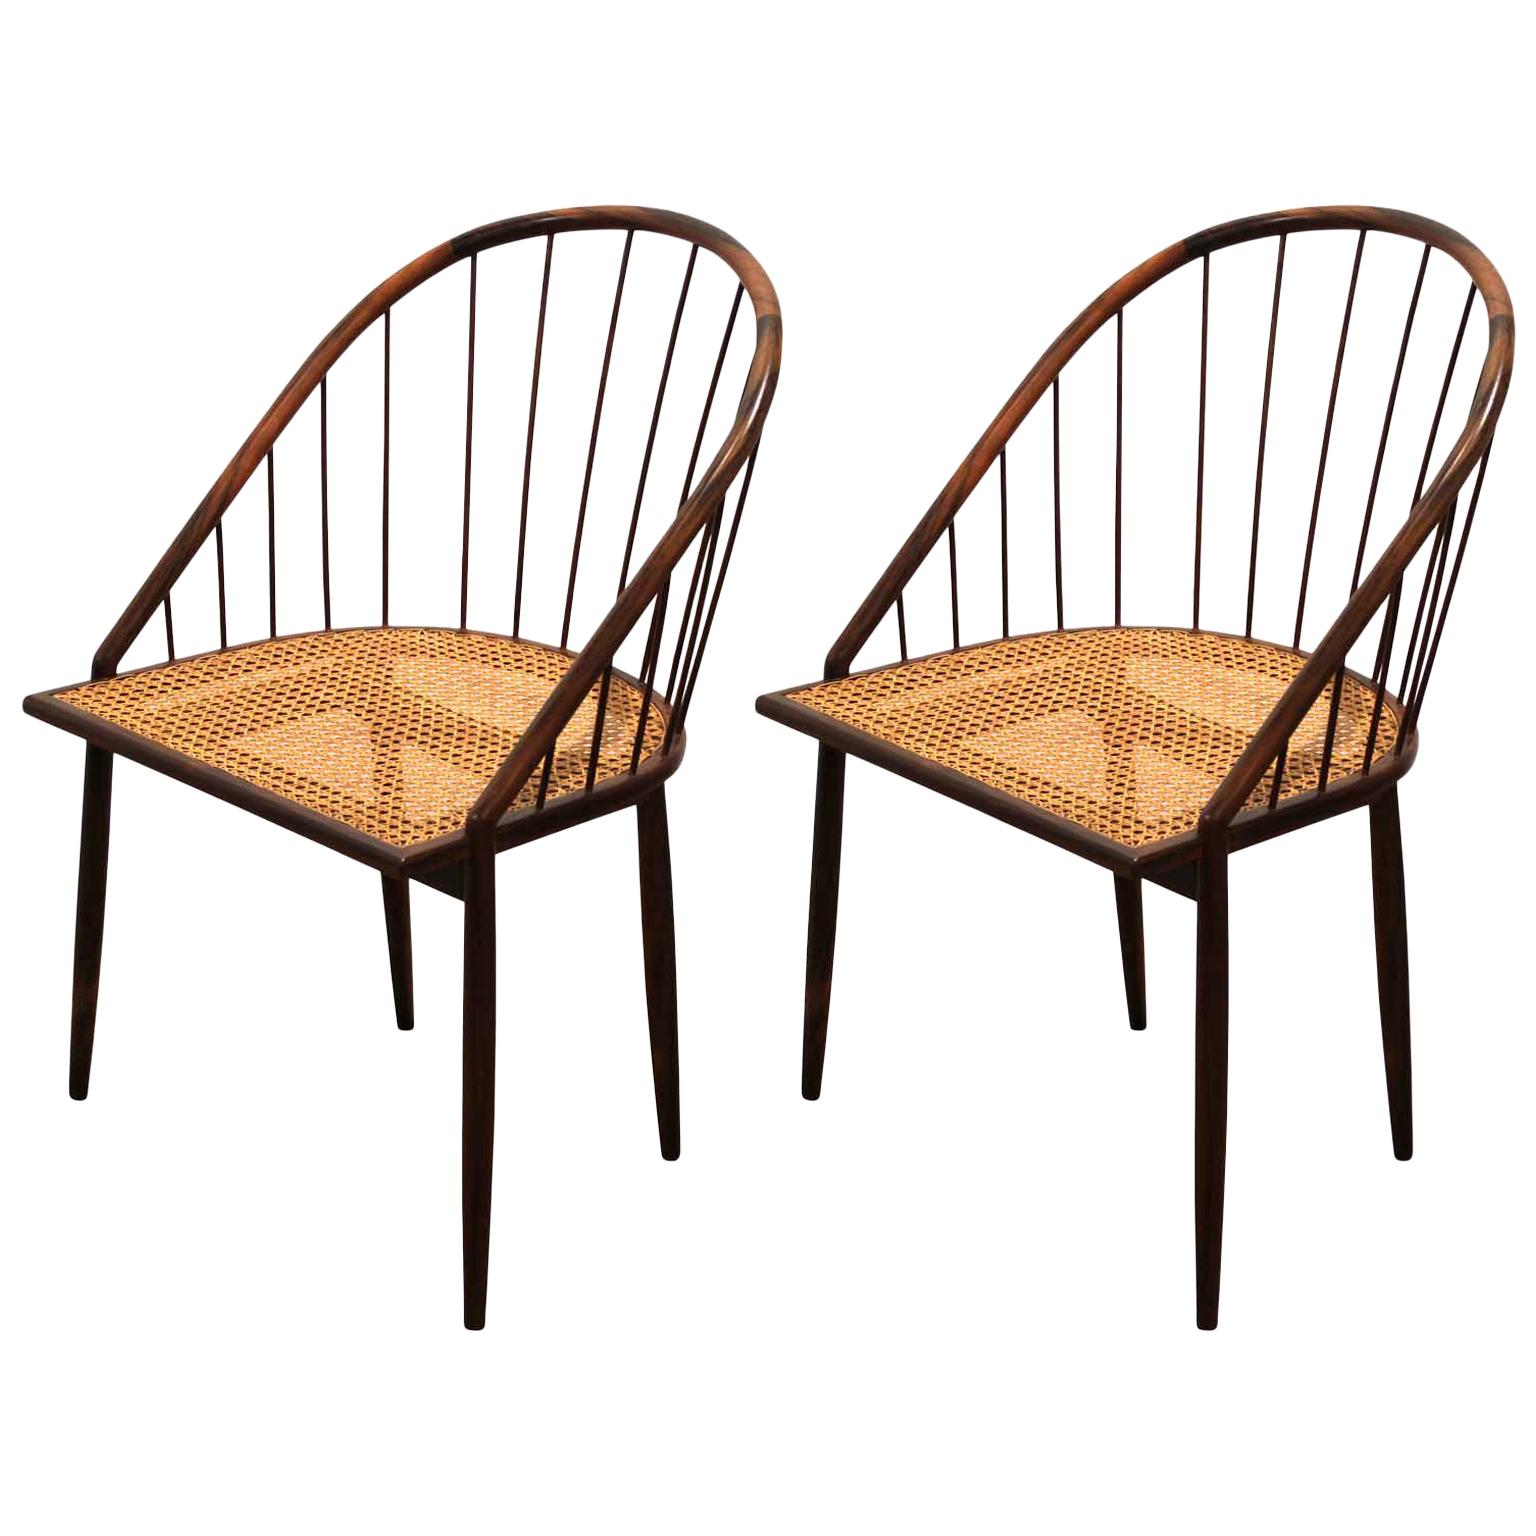 Pair of Brazilian Modern Cane Curva Chairs by Joaquim Tenreiro